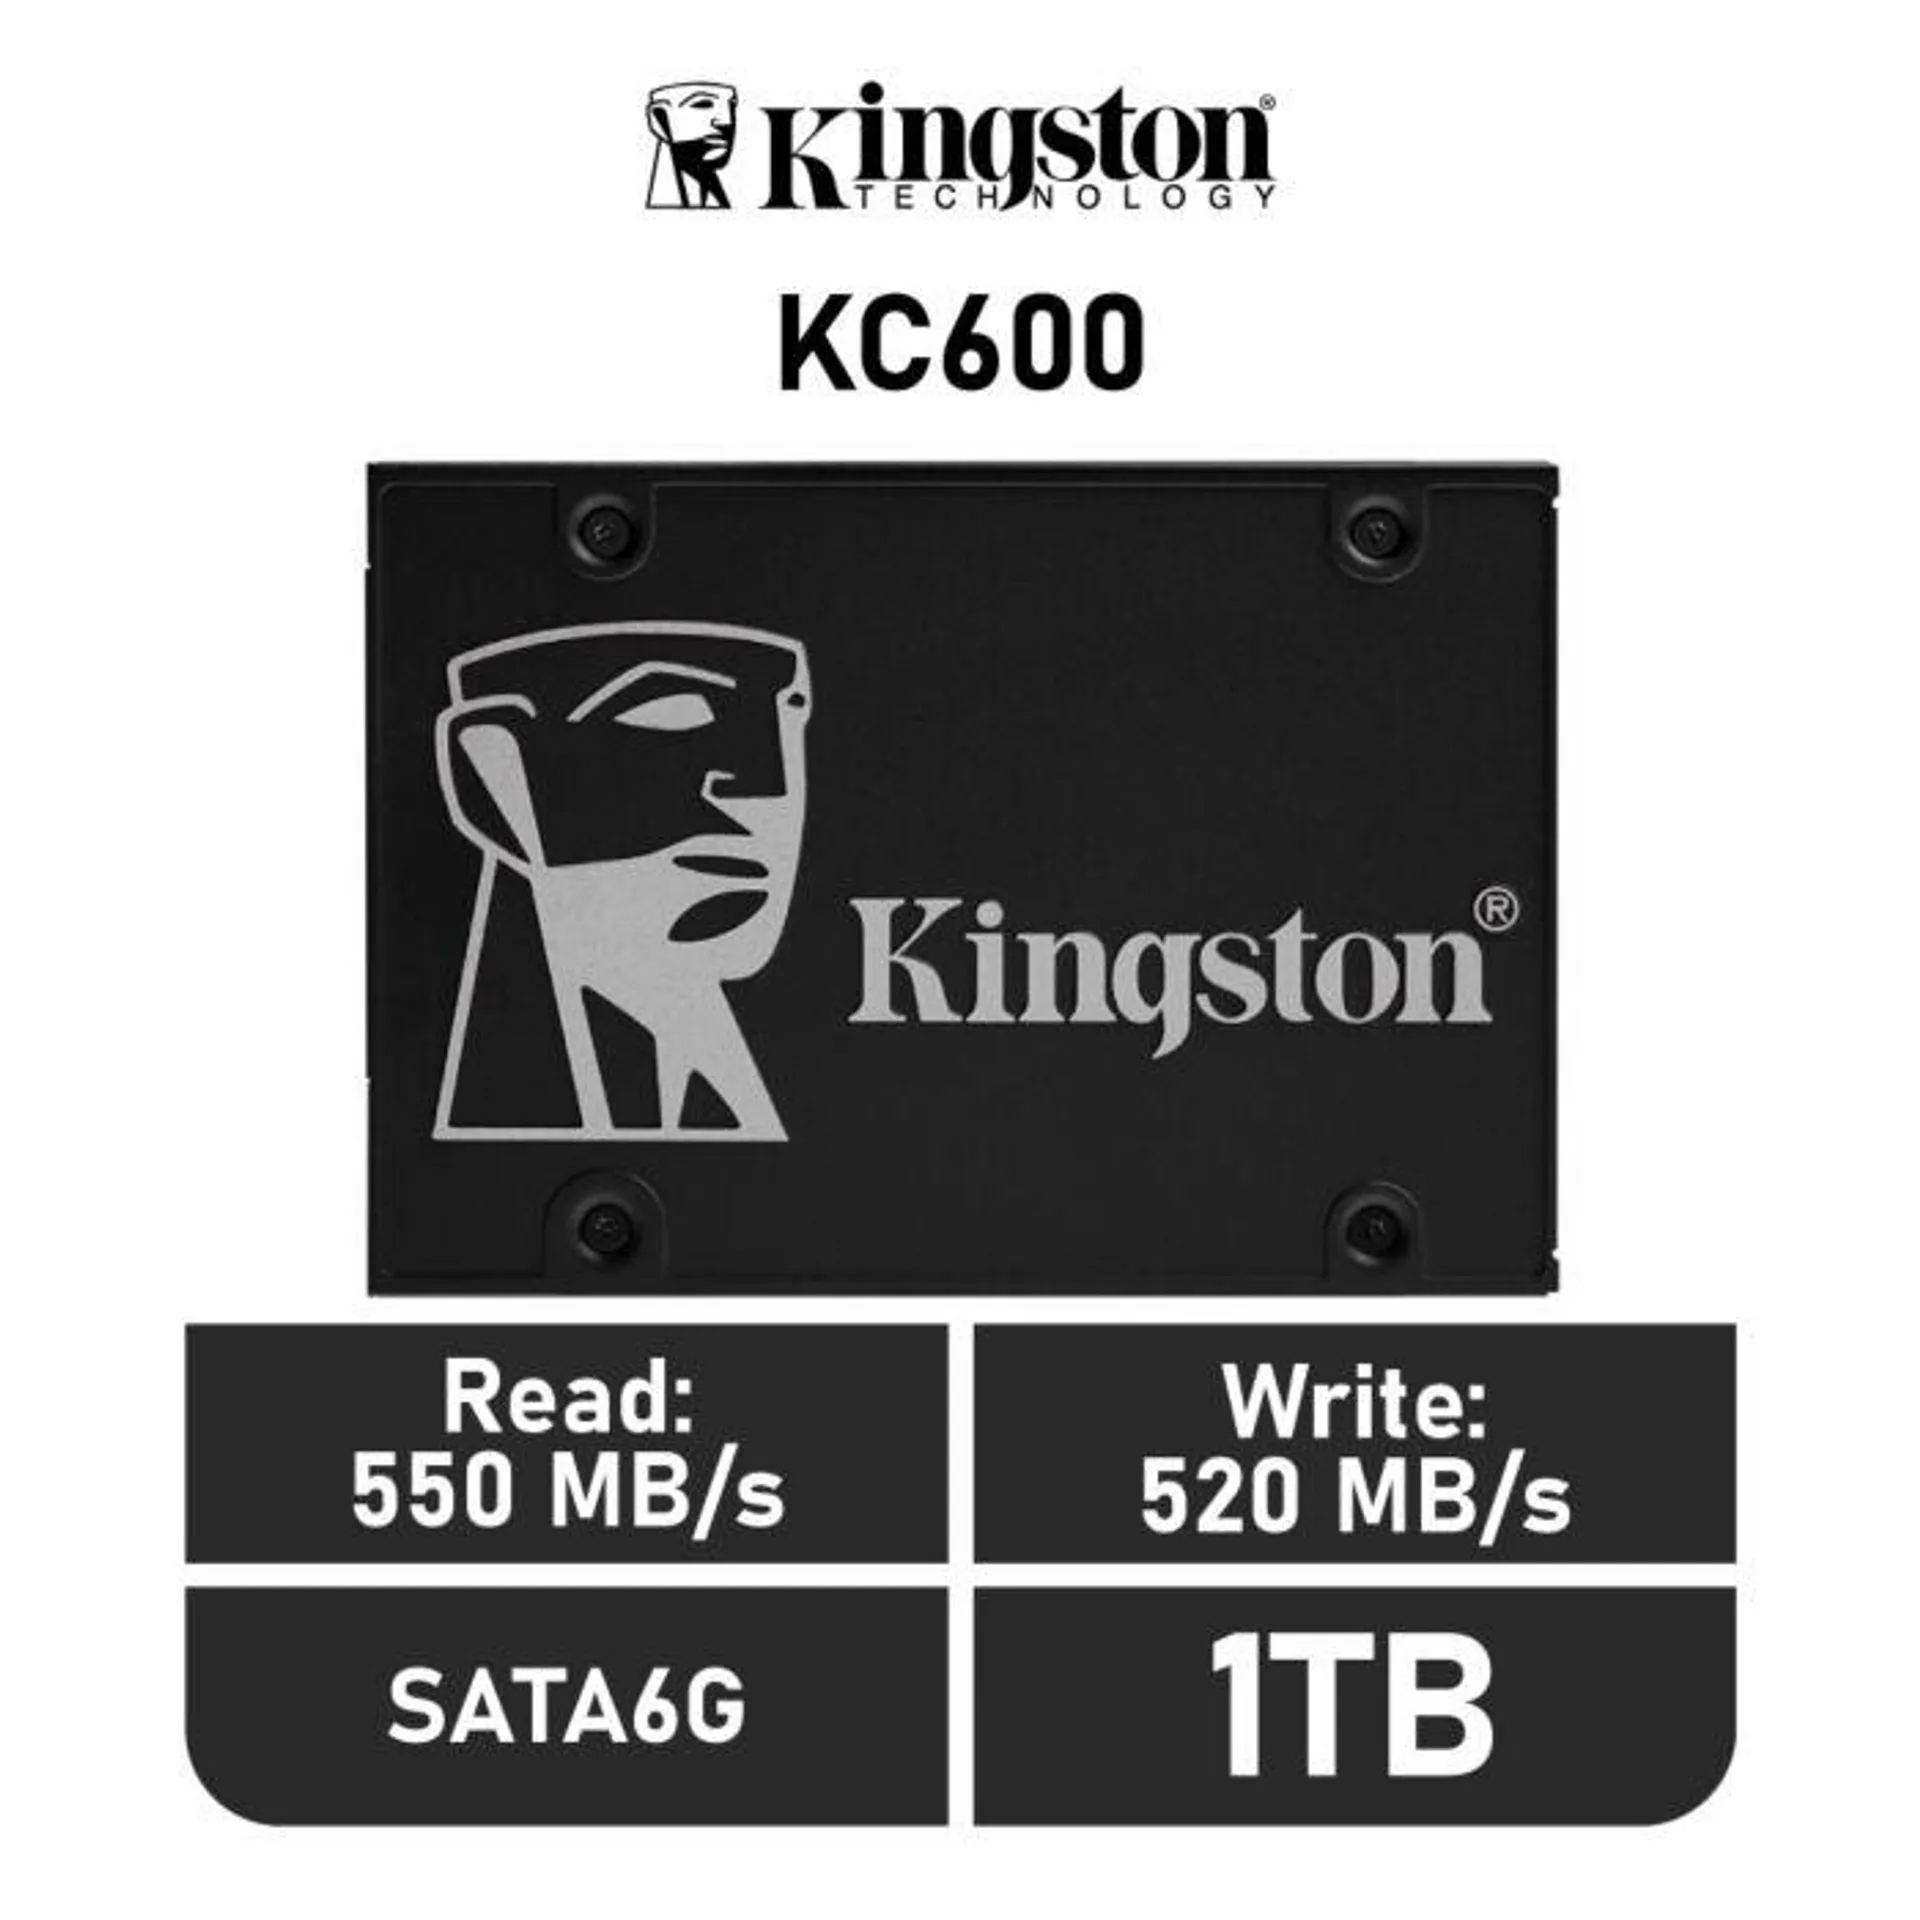 Kingston KC600 1TB SATA6G SKC600/1024G 2.5" Solid State Drive